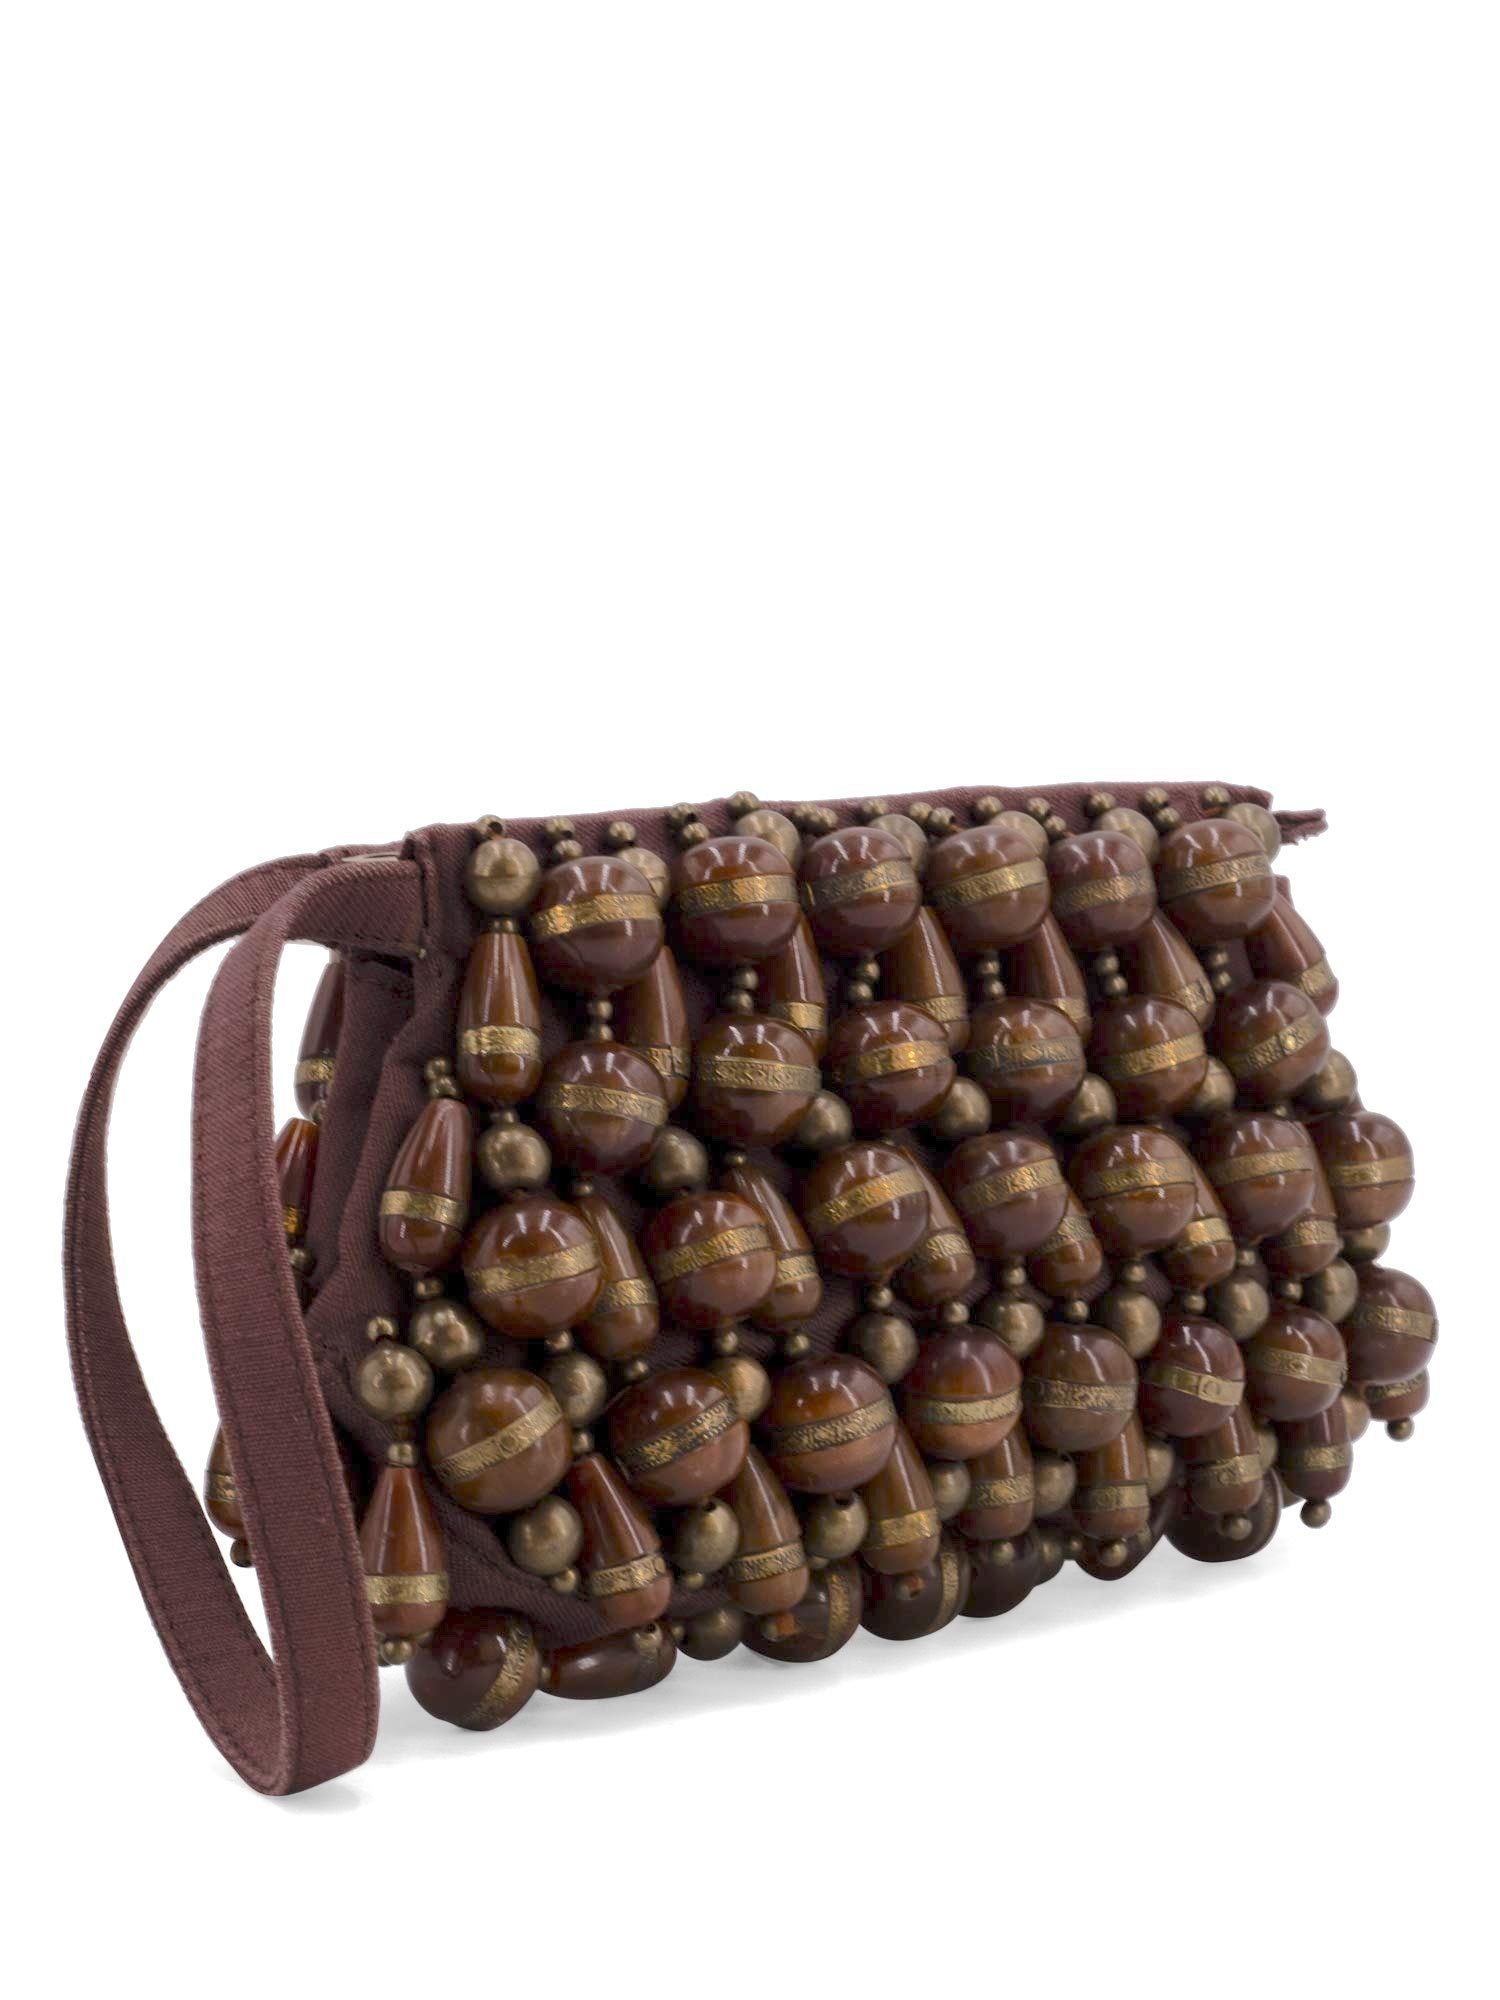 Chloe Canvas Beaded Wristlet Bag Brown-designer resale